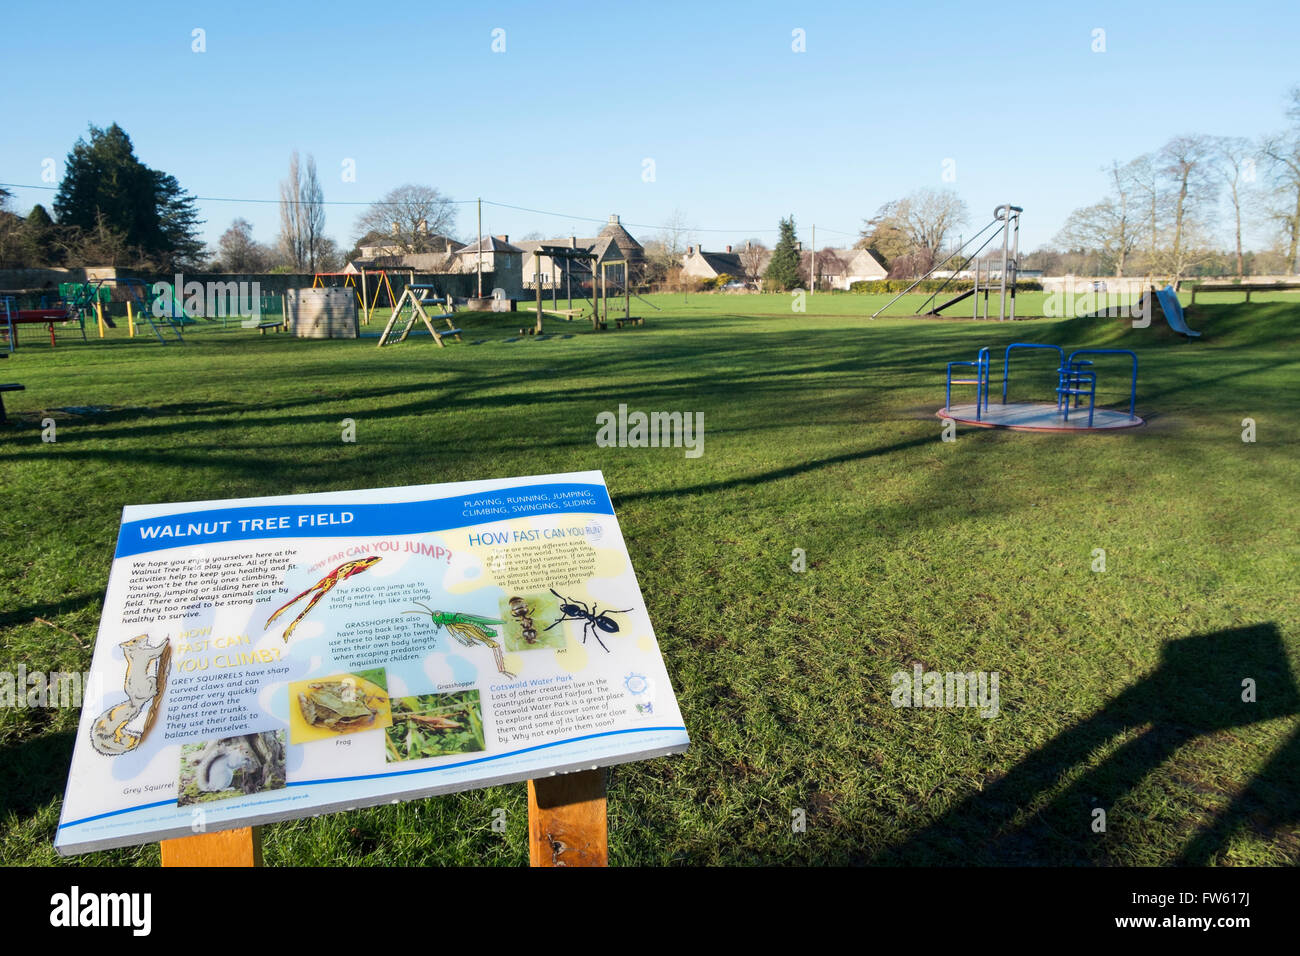 Walnut Tree Field playground in Fairford, Gloucestershire, UK Stock Photo